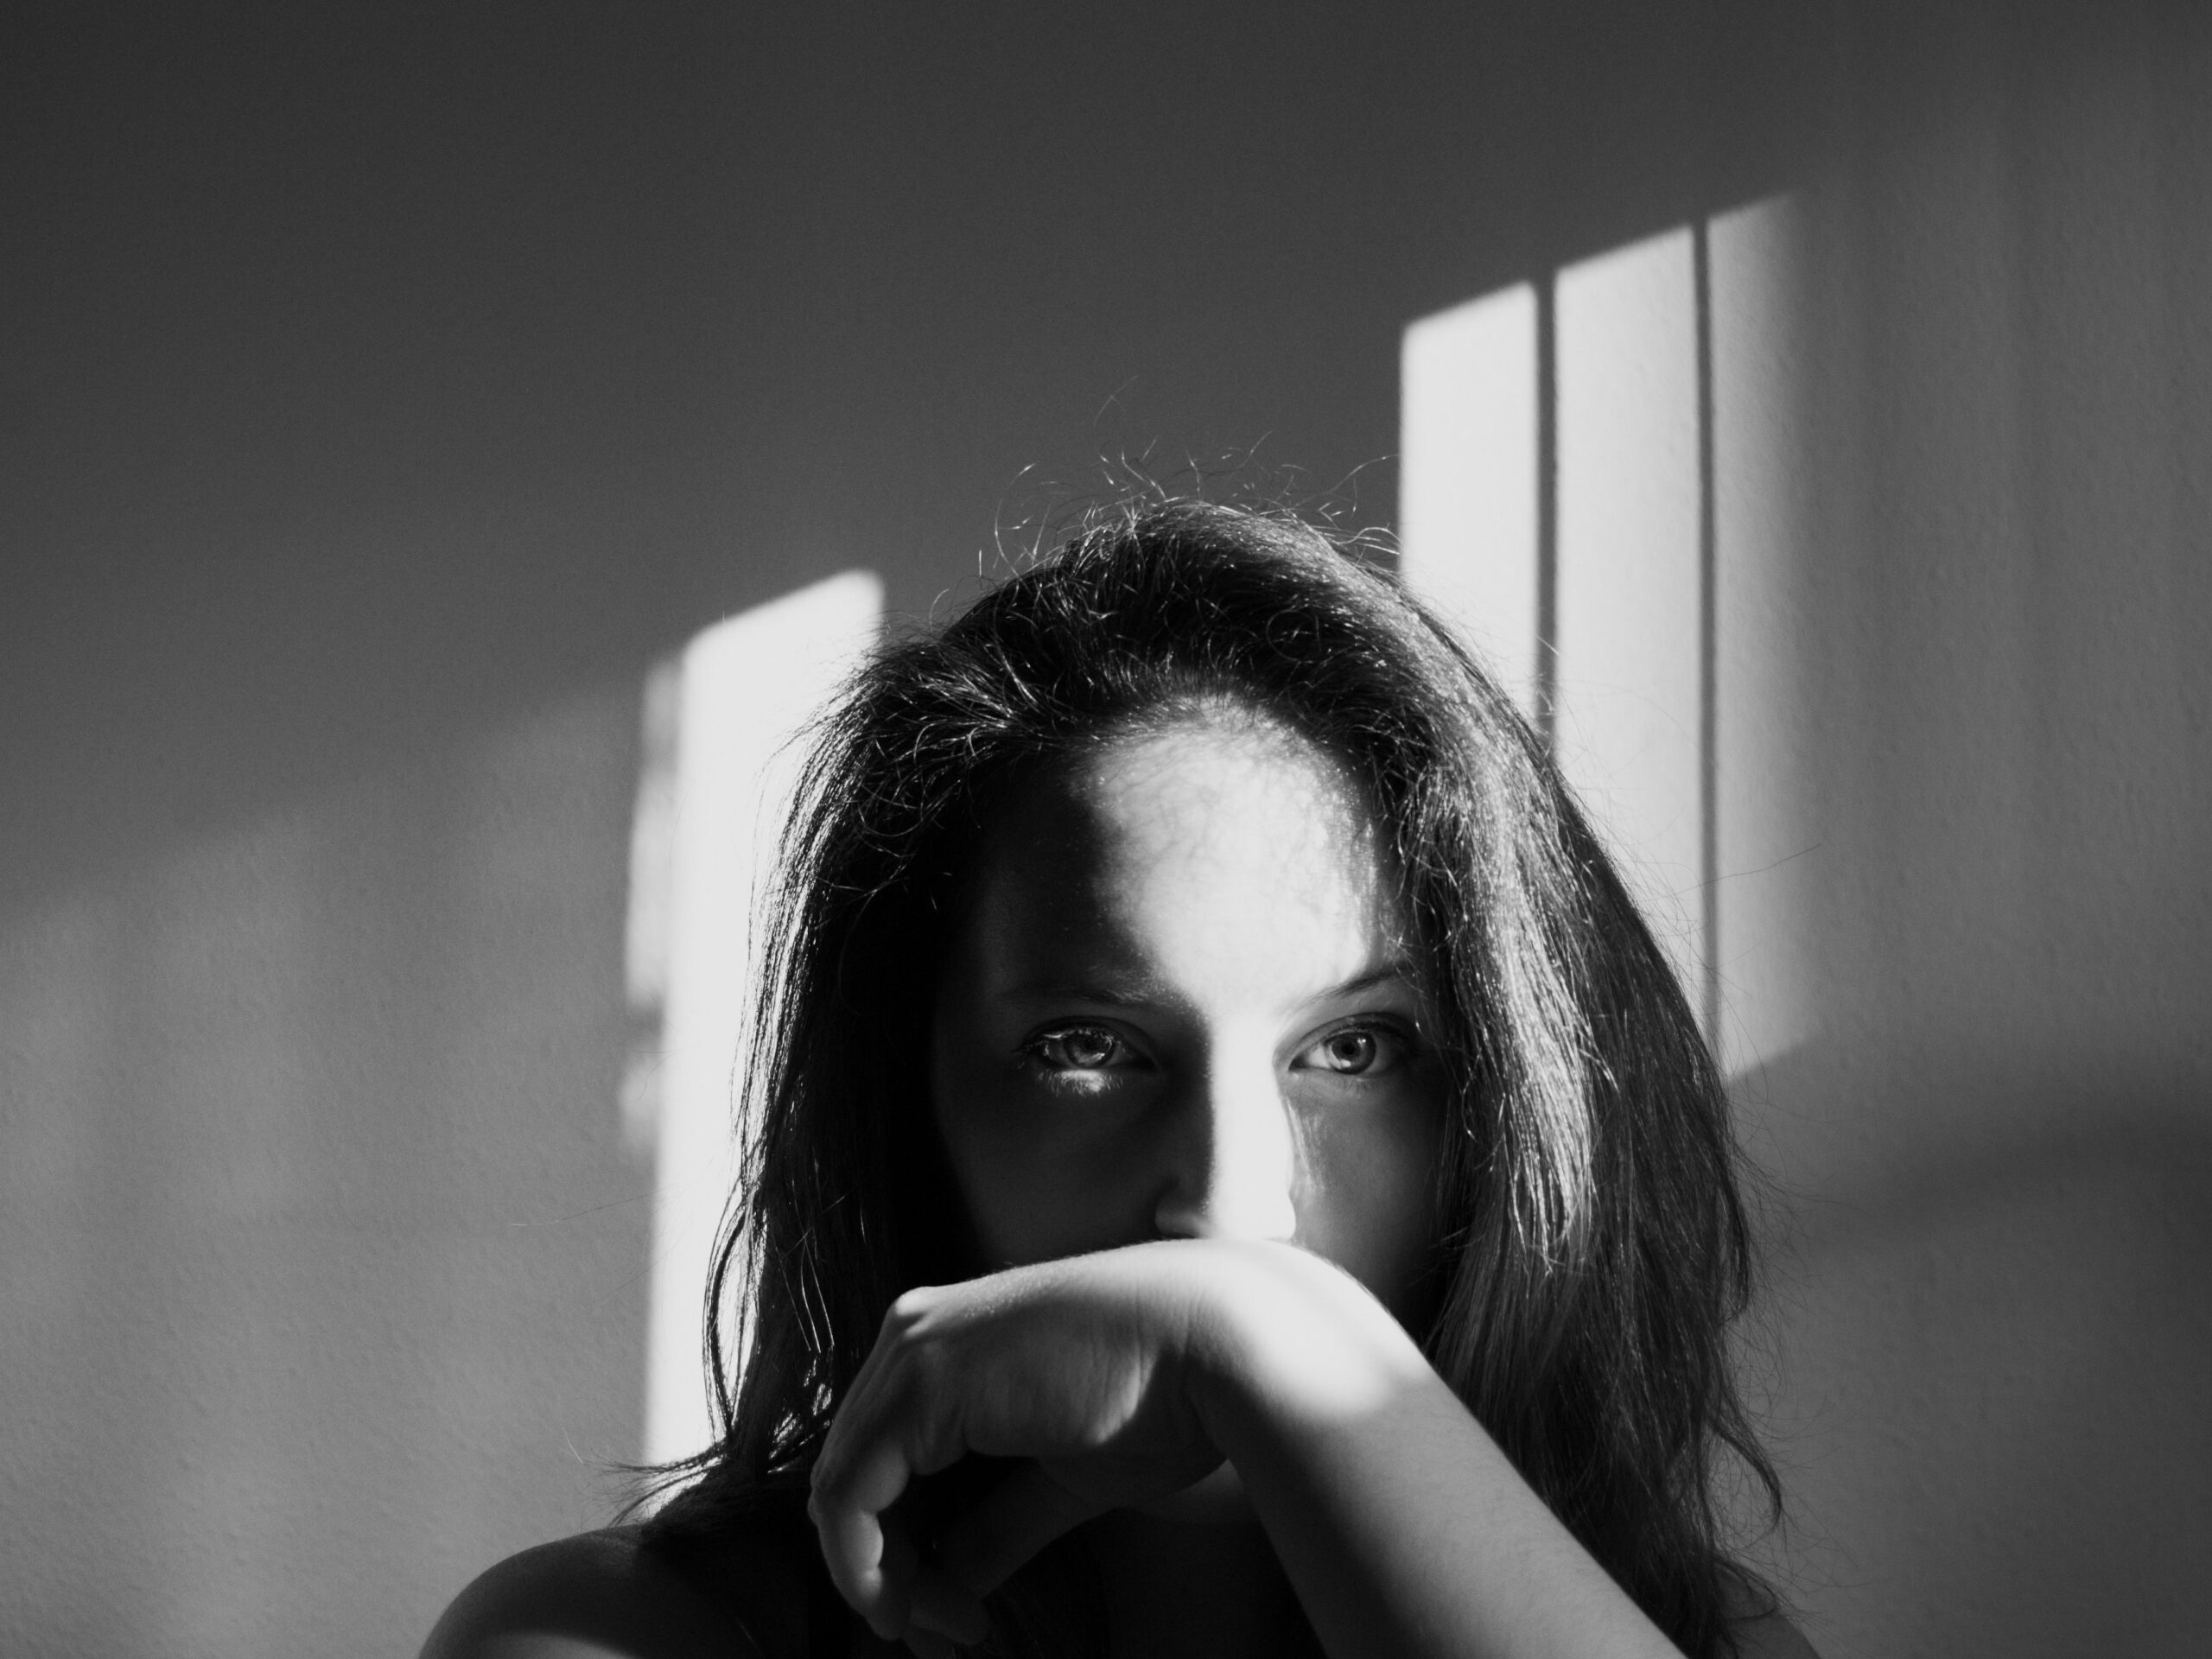 arianna-mauri-BnW Shadows- photoshoot con poca luce - girl portrait